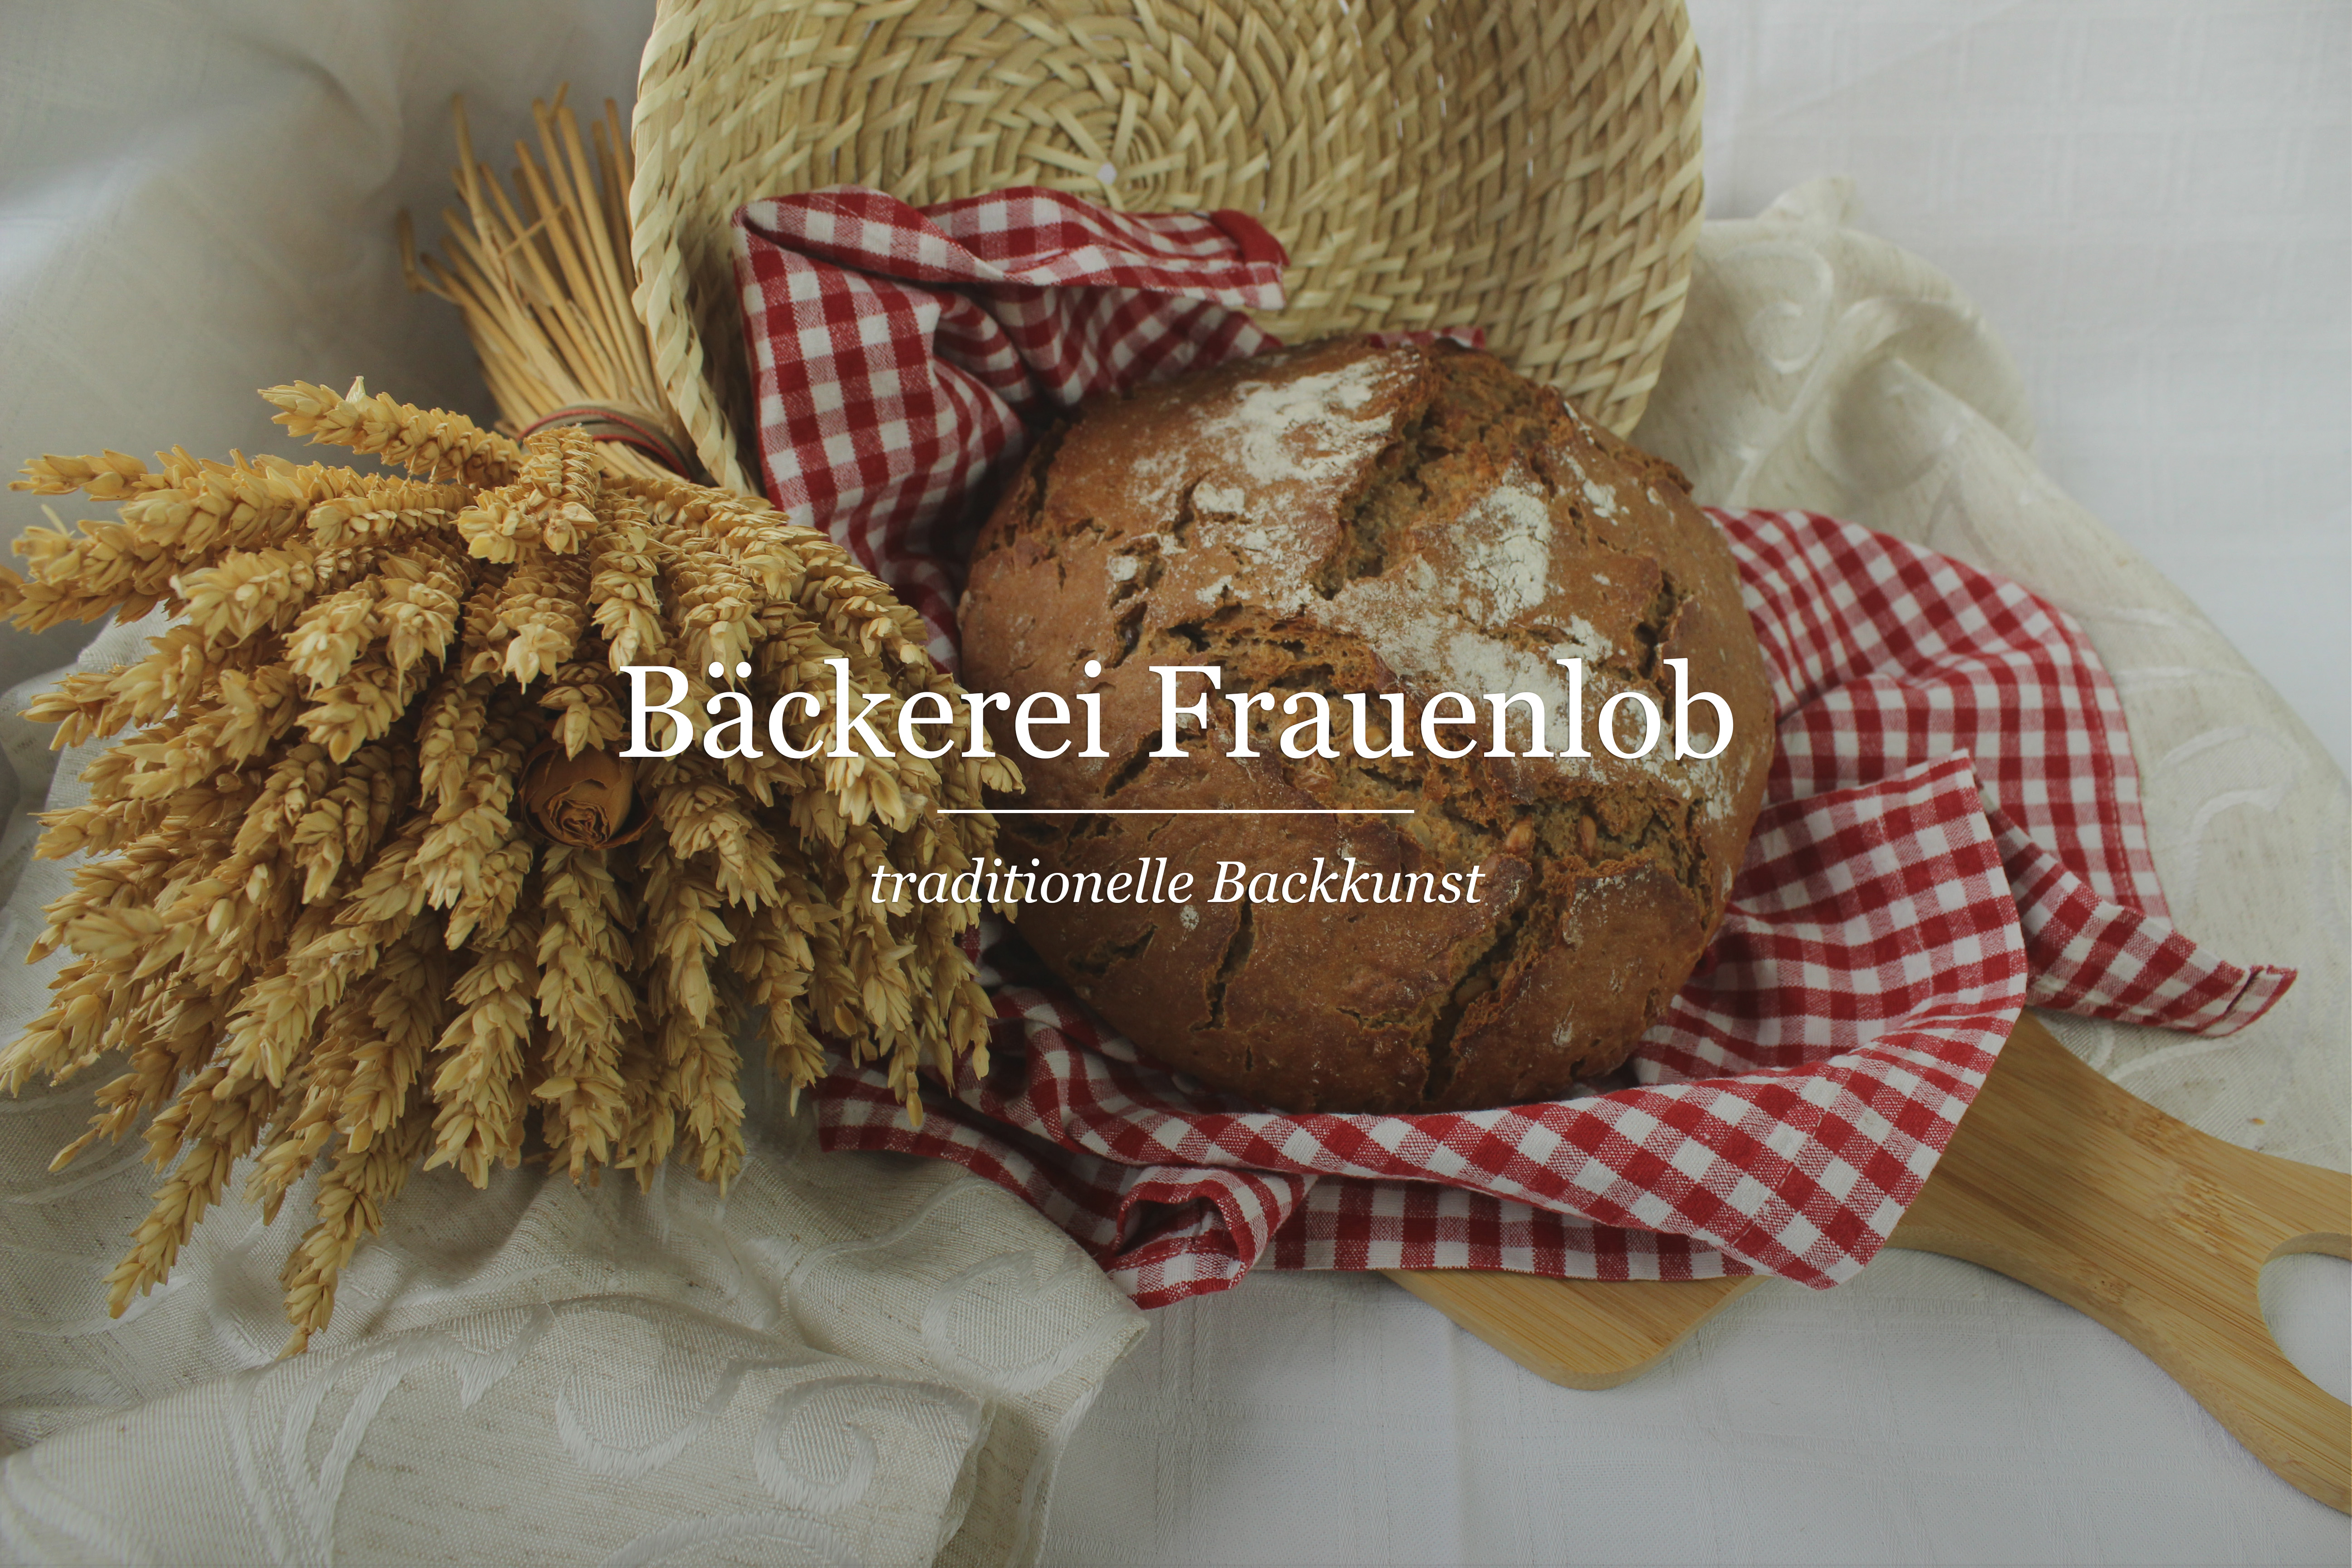 (c) Baeckerei-frauenlob.at